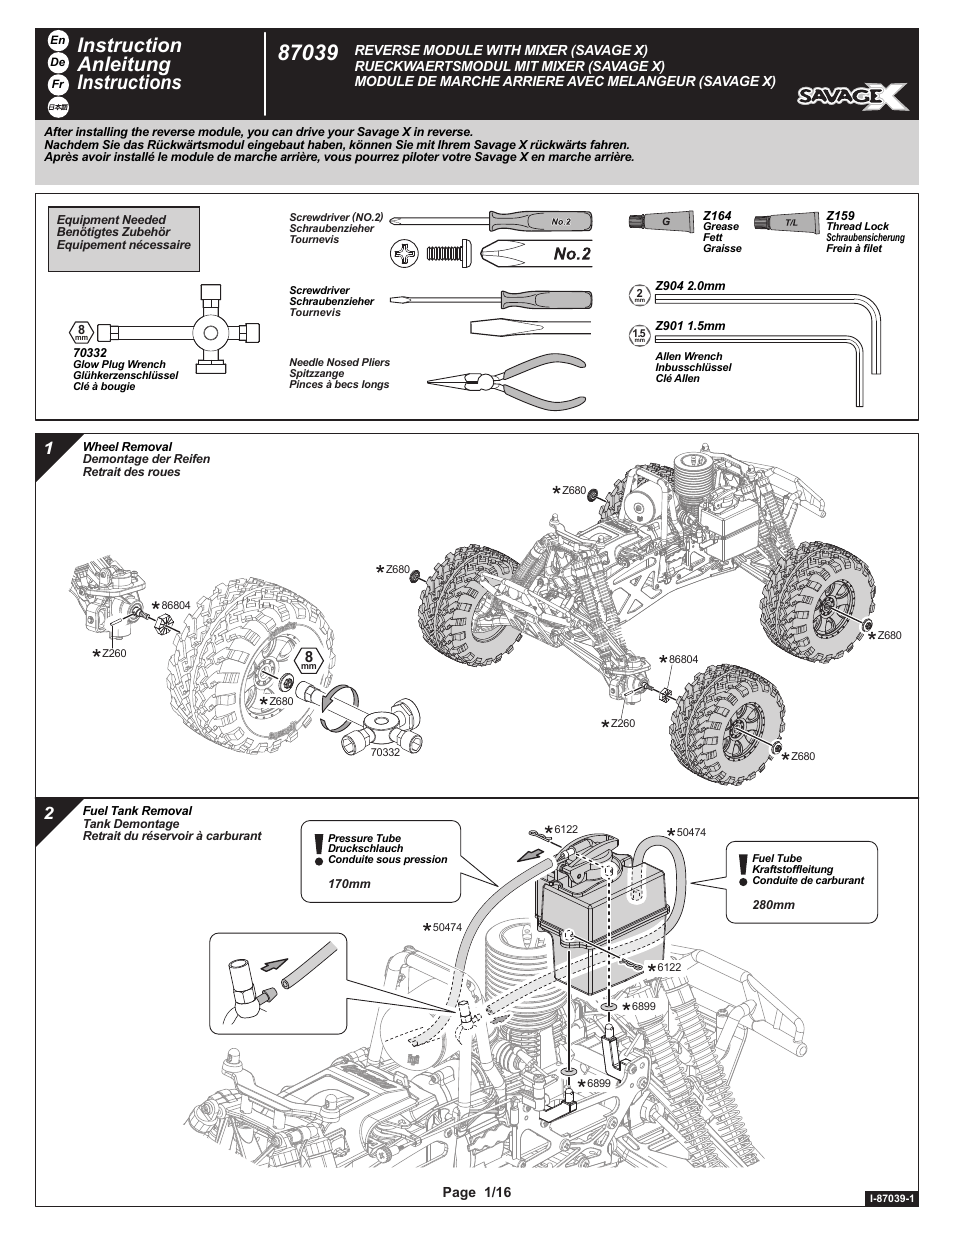 HPI Racing Savage Reverse Module User Manual | 16 pages | Original mode